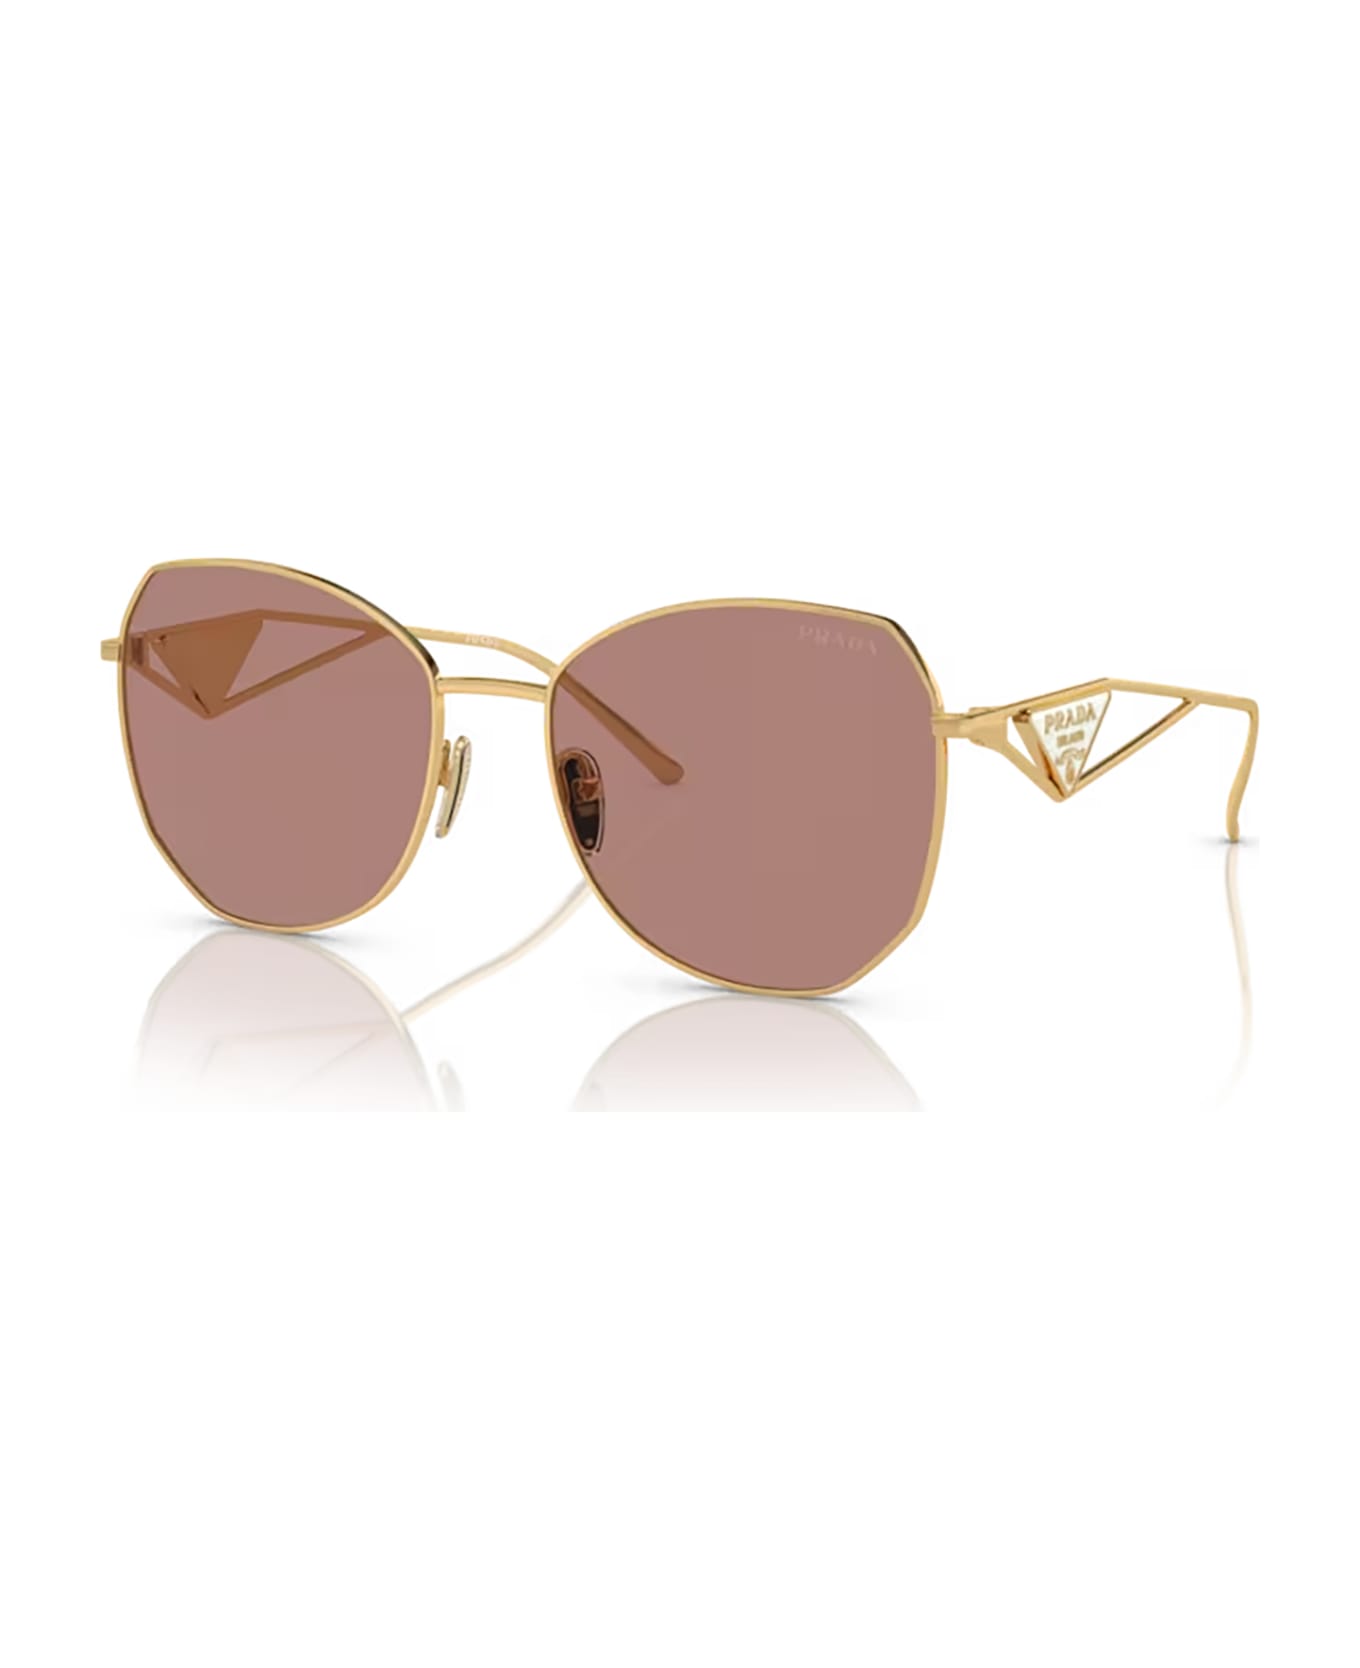 Prada Eyewear Pr 57ys Gold Sunglasses - Gold